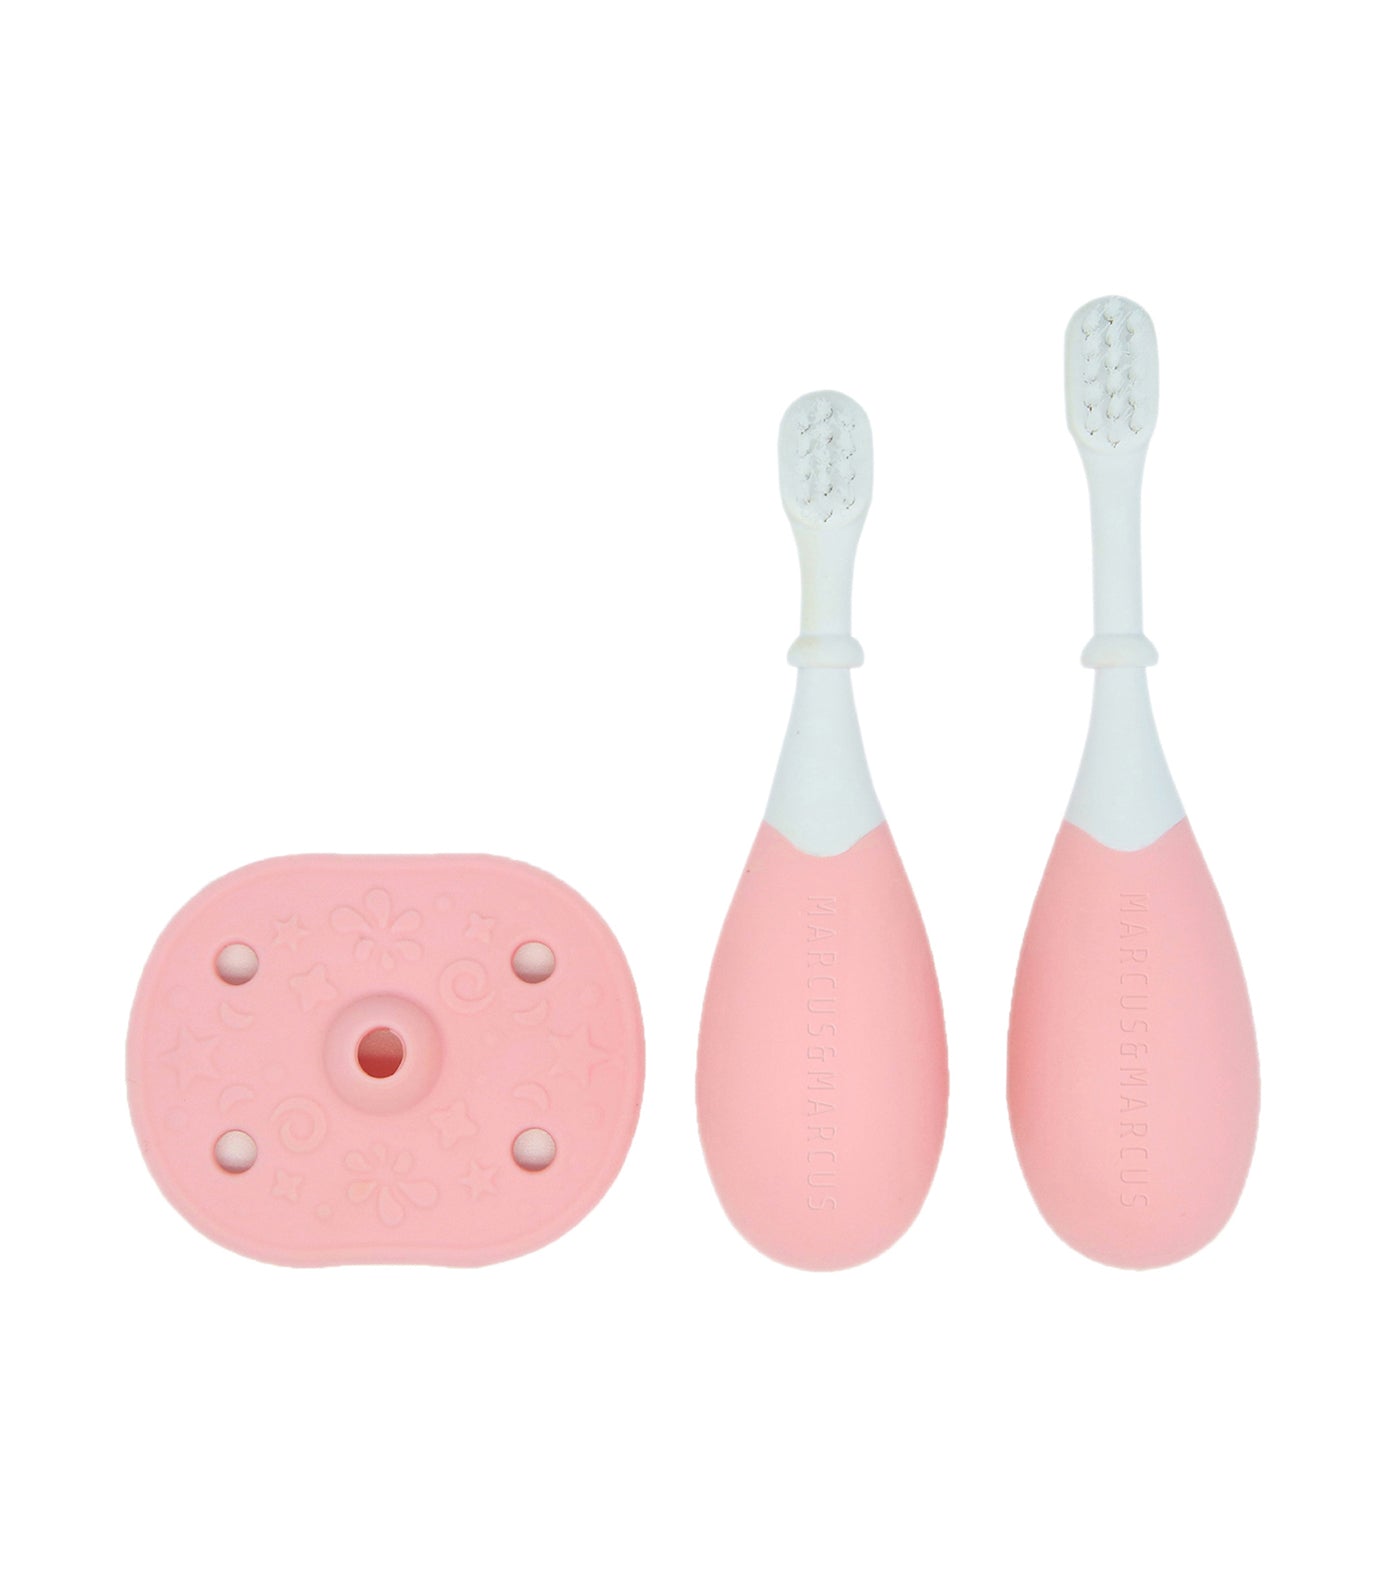 marcus & marcus 3-stage palm grasp toothbrush brush set